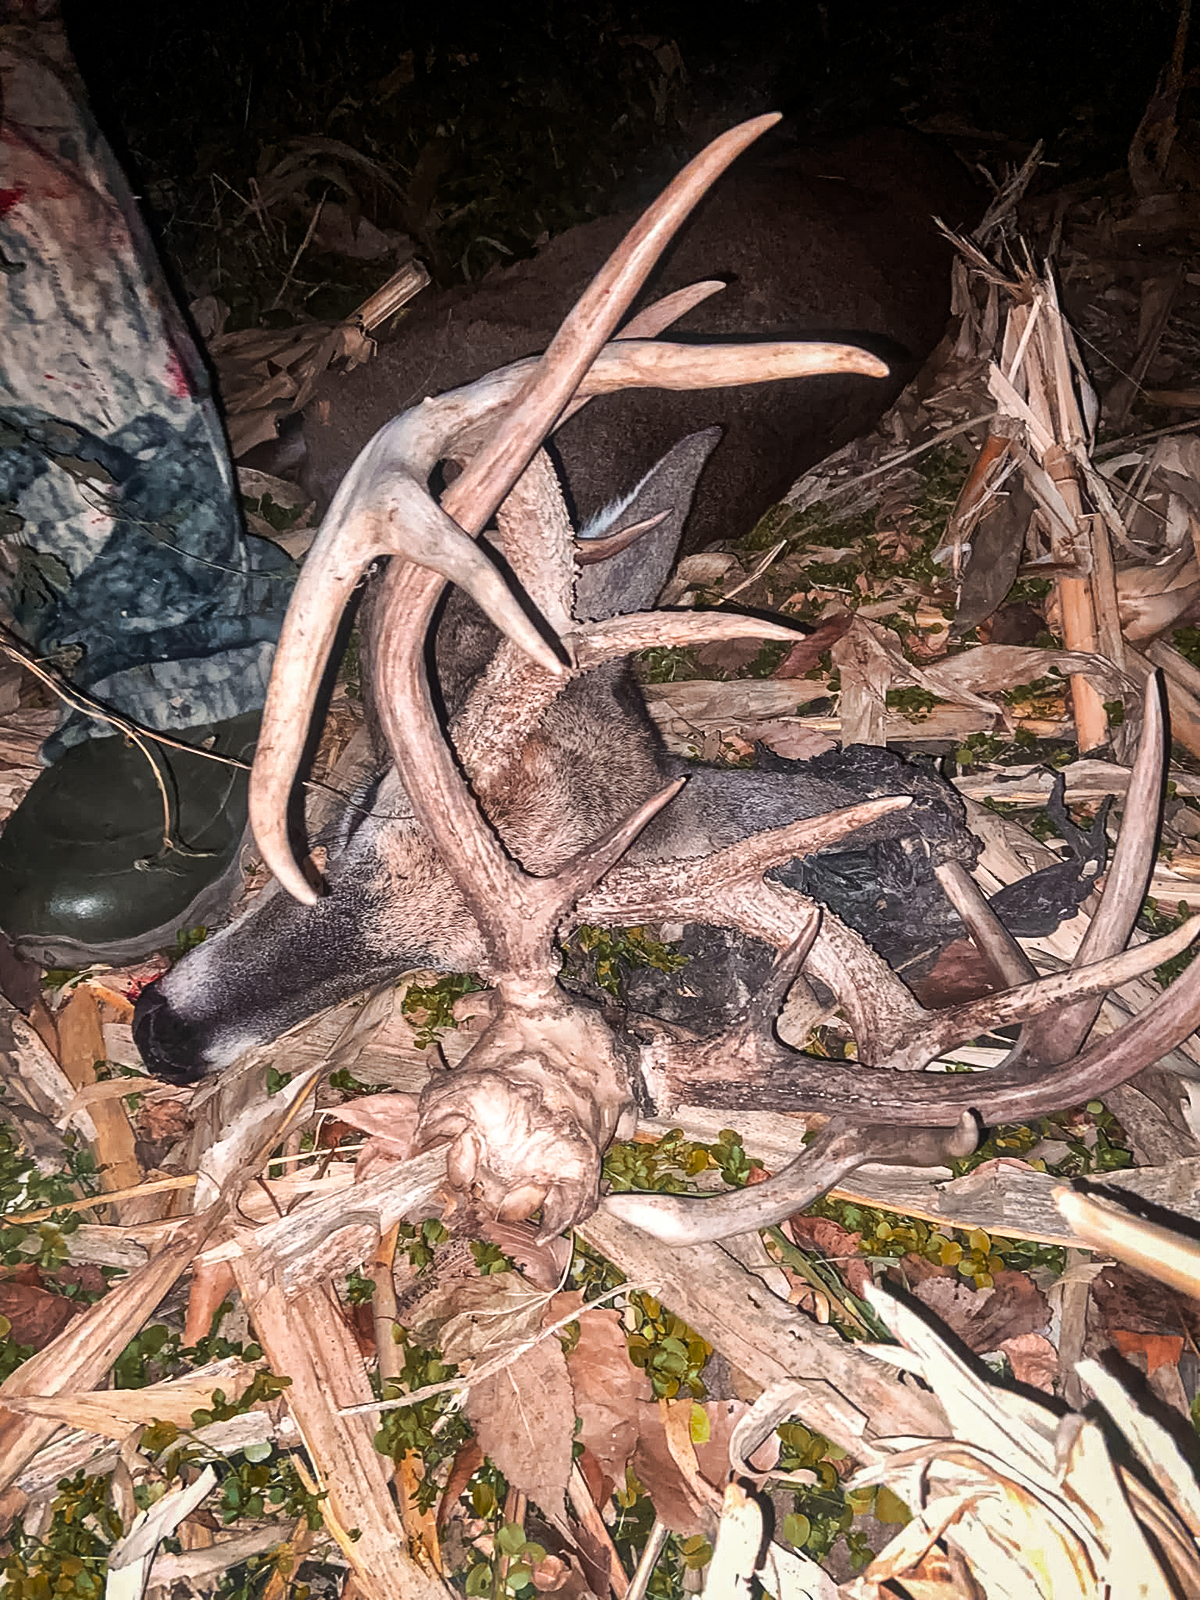 Deer skull found tangled in another bucks antlers